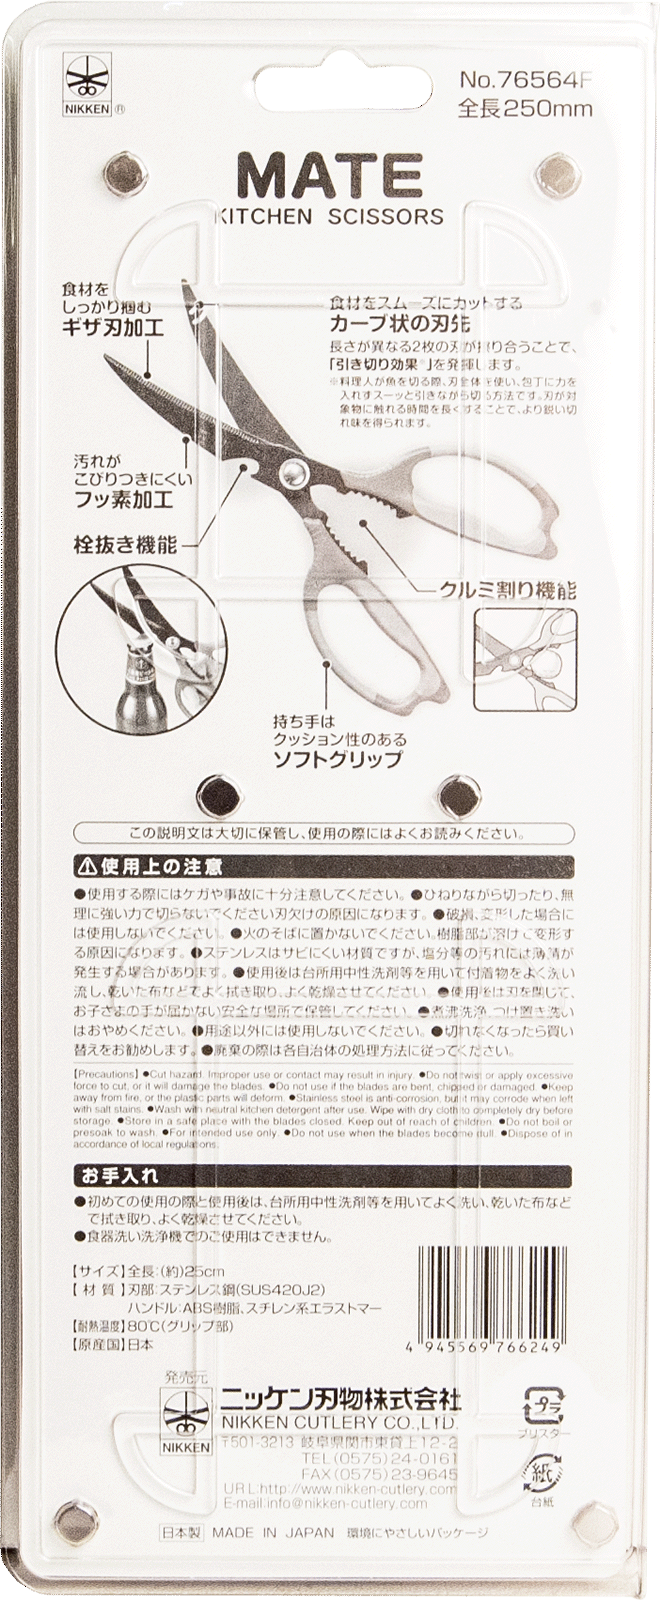 Japanese scissors Curved blade flourine coated, detachable 2